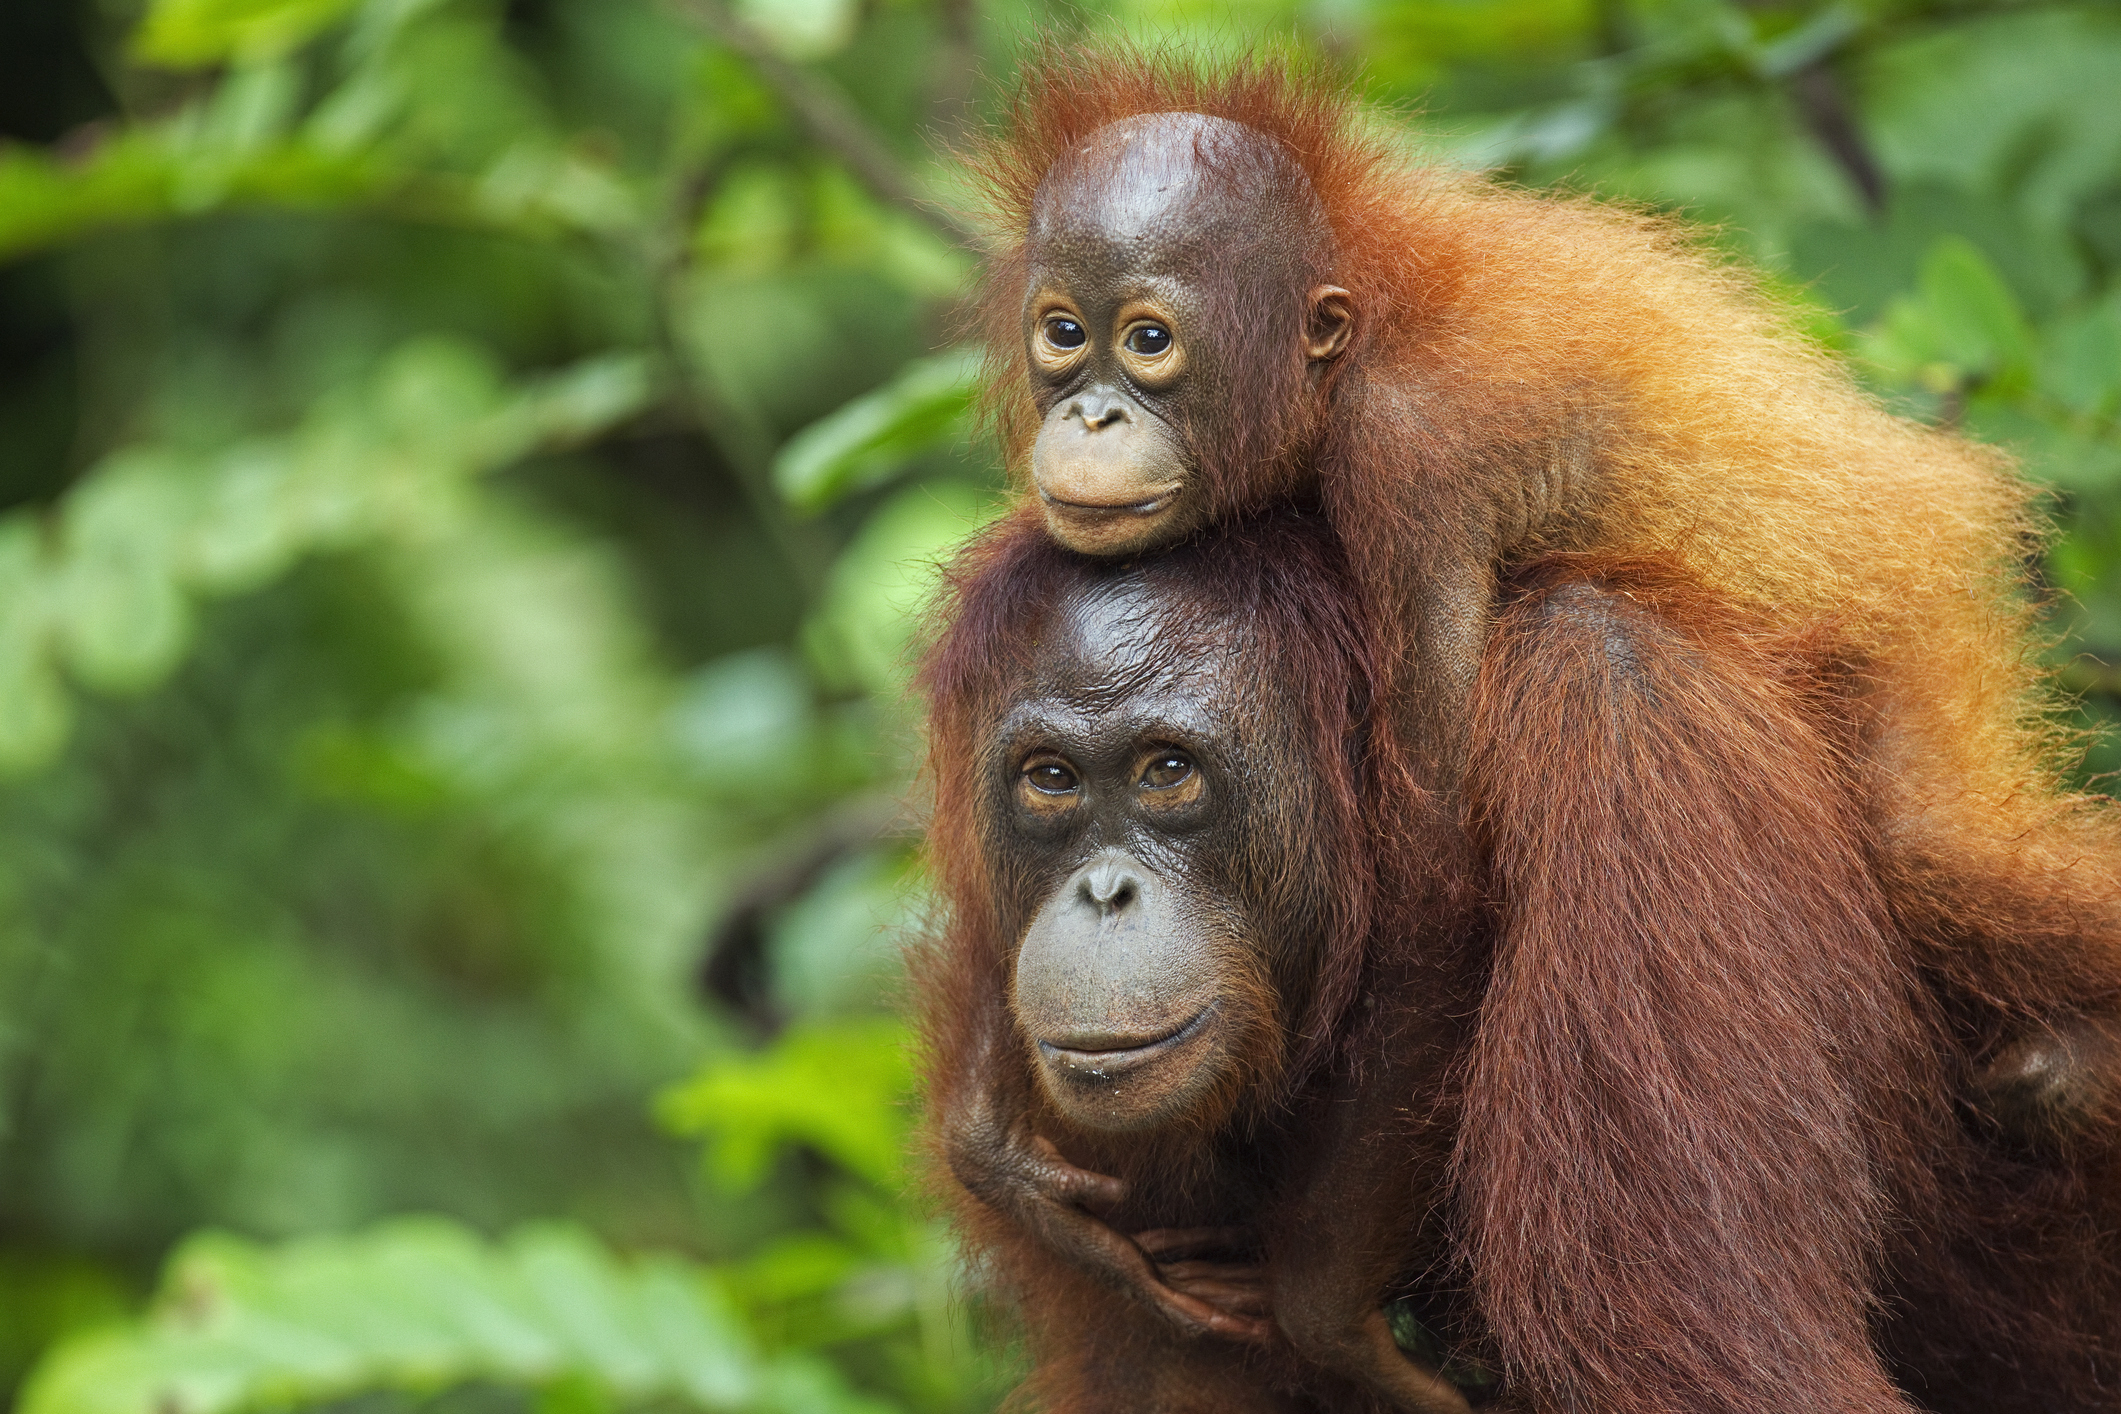 A mother and baby orangutan